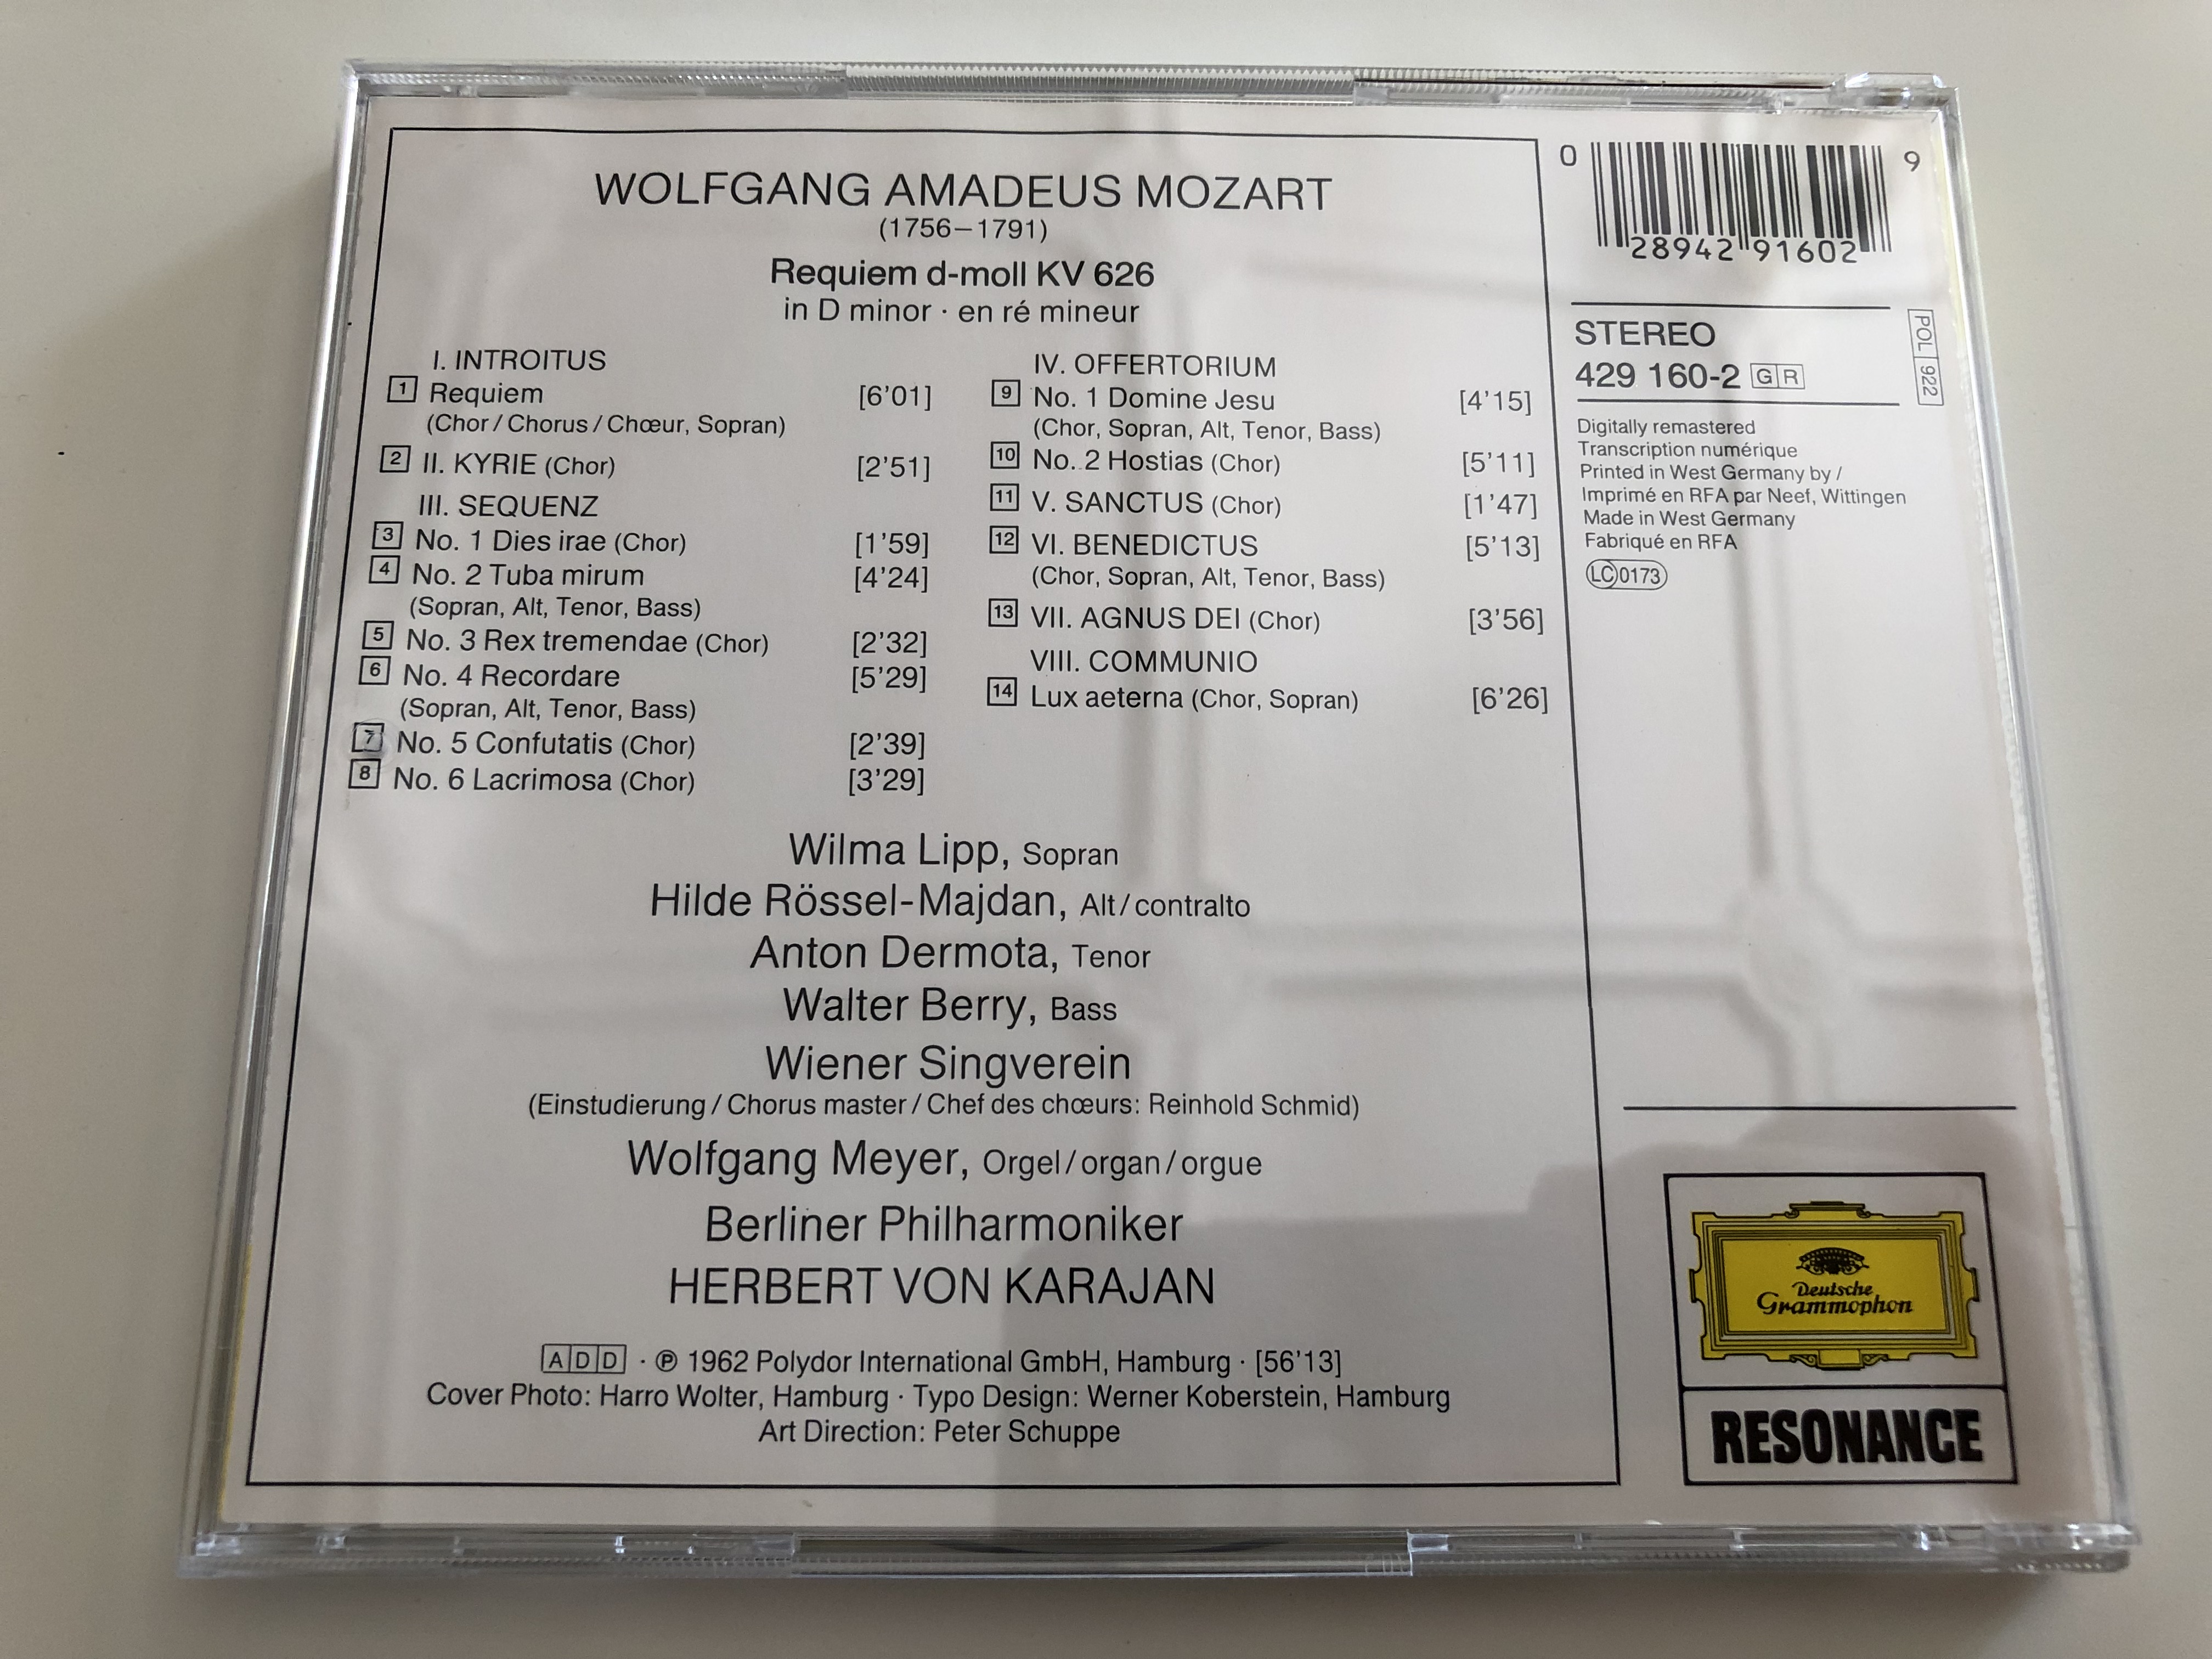 mozart-requiem-wilma-lipp-hilde-r-ssel-majdan-andton-dermota-walter-beny-wiener-singverein-berliner-philharmoniker-conducted-by-herbert-von-karajan-resonance-429-160-2-audio-cd-5-.jpg